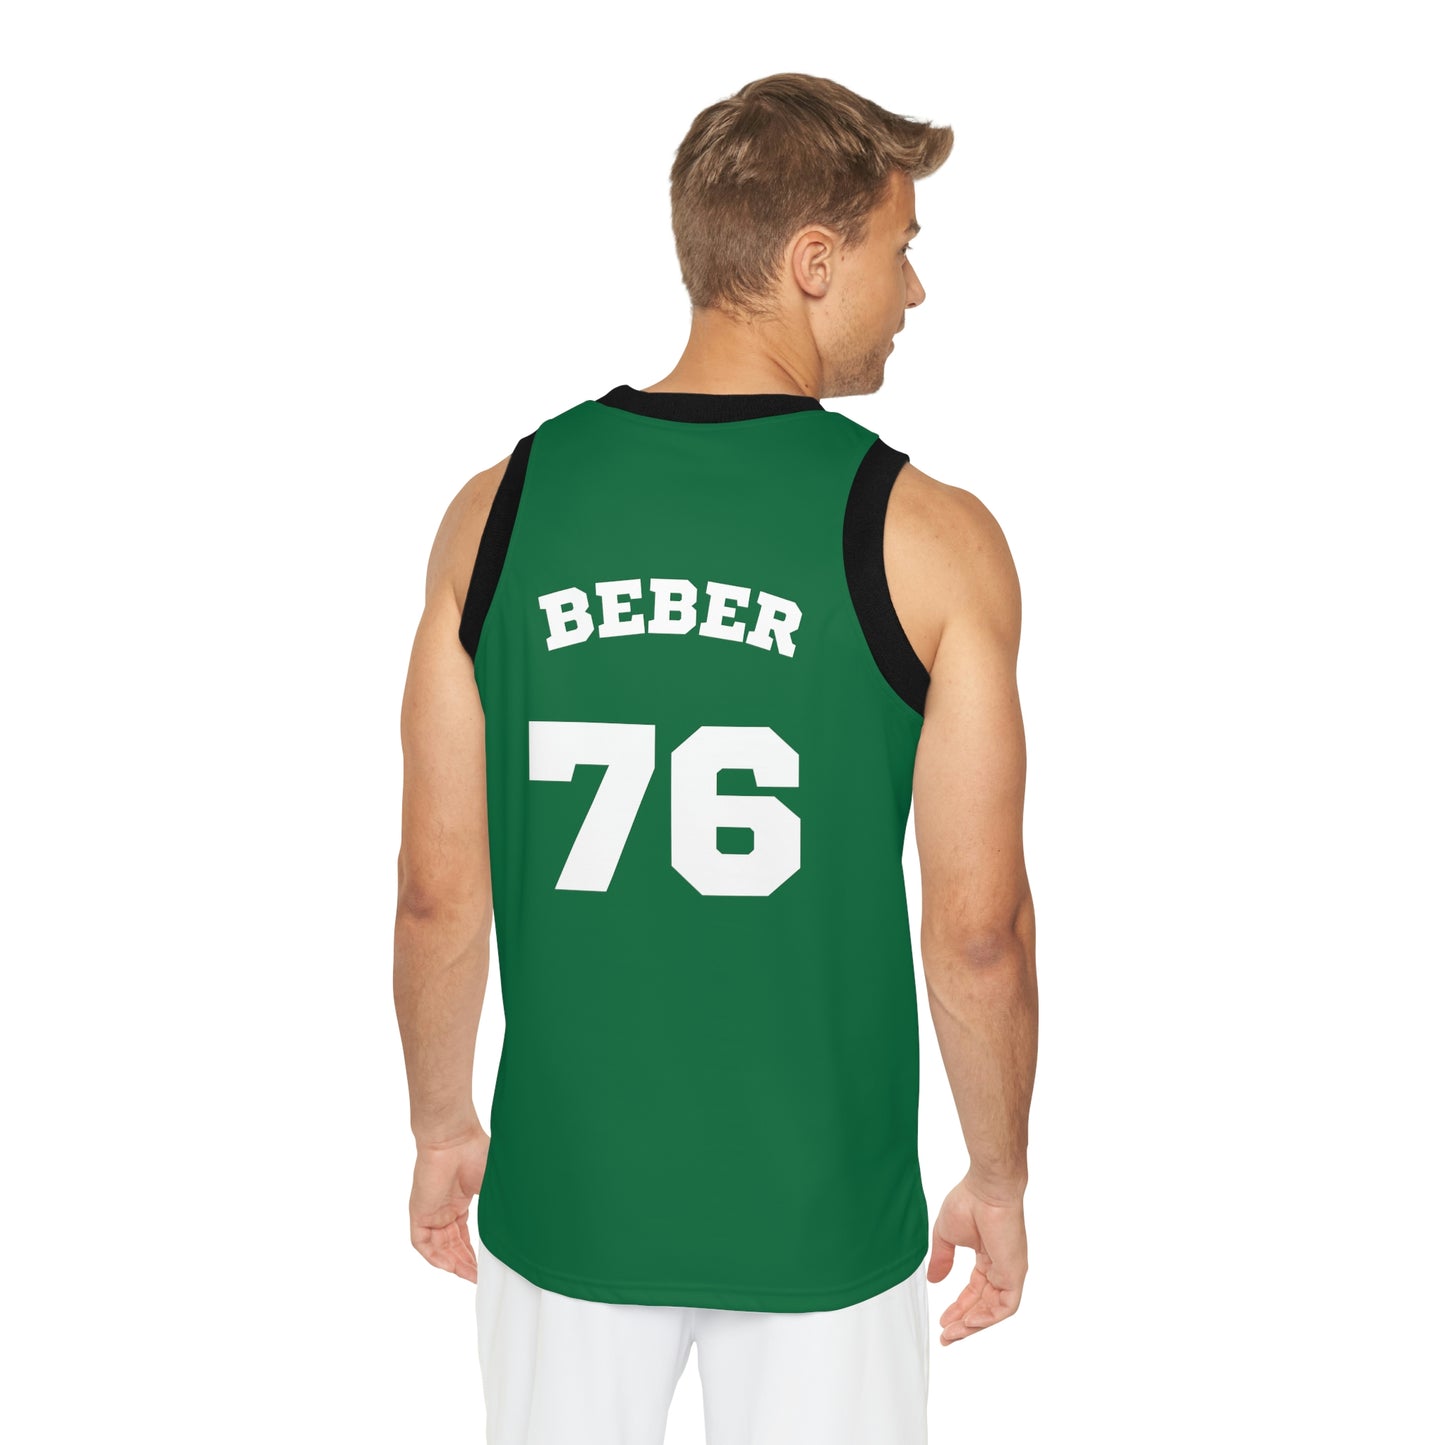 Beber Camp Adult Basketball Jersey